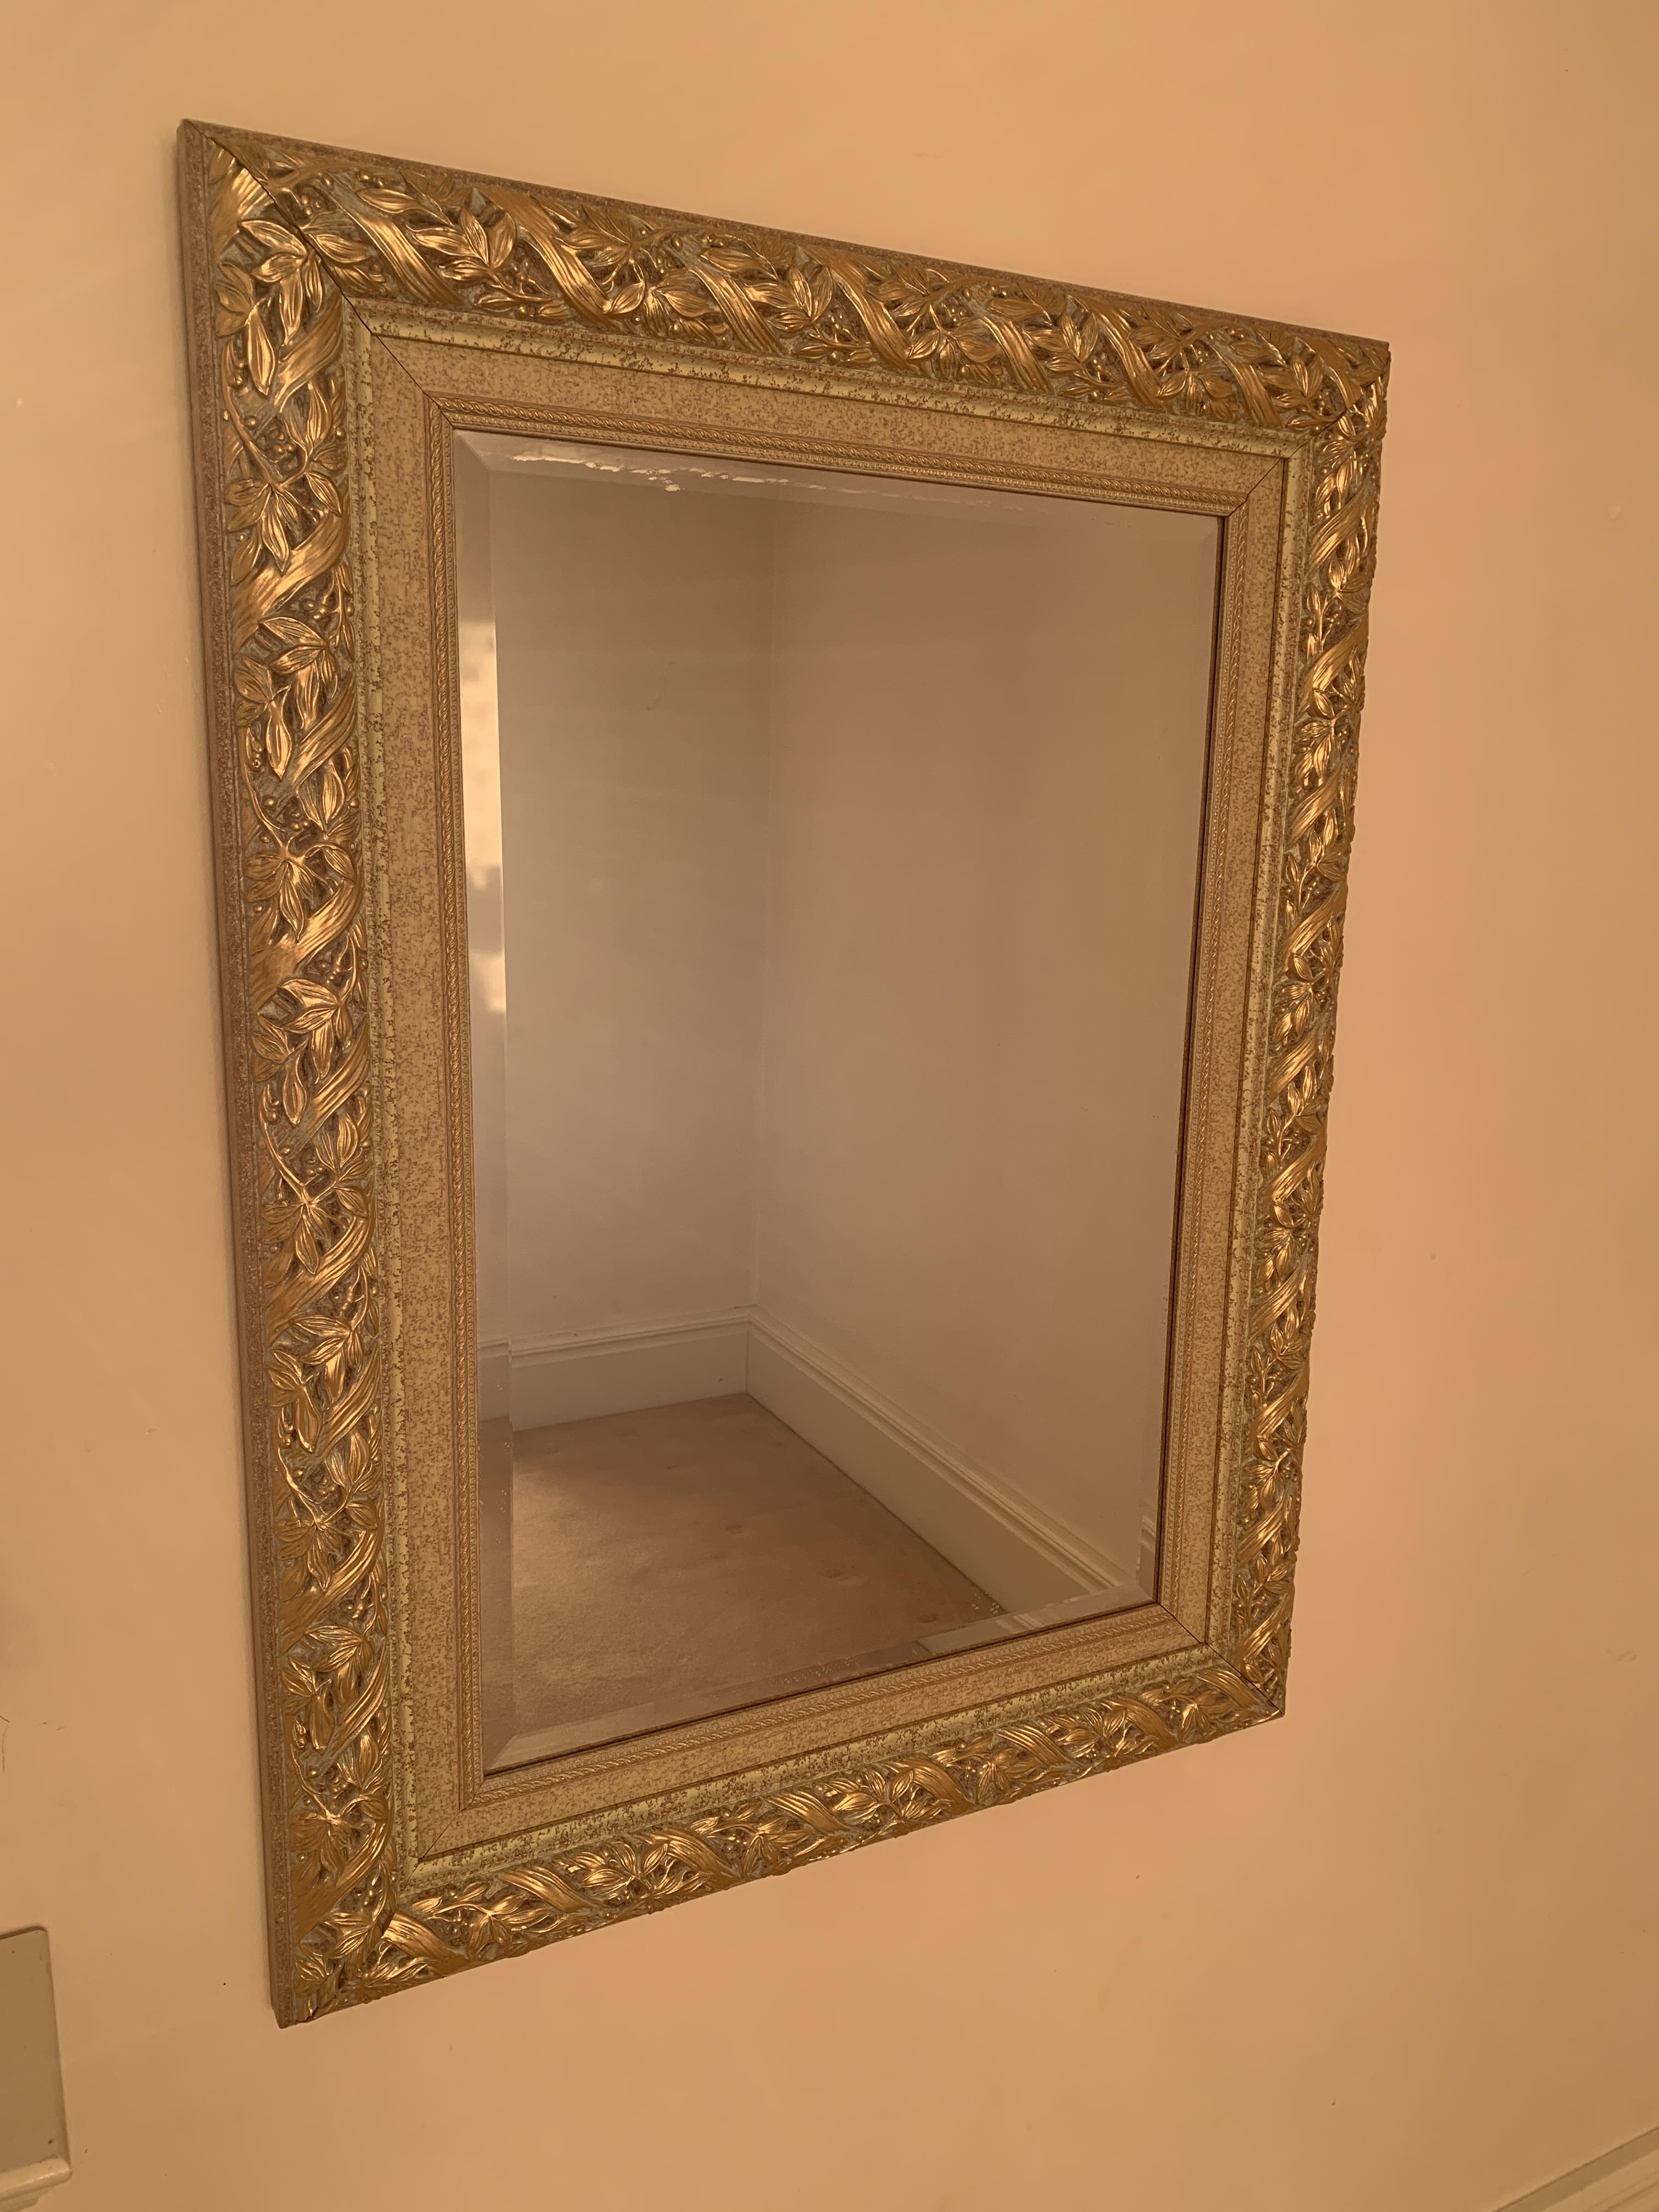 Gilt frame wall mirror - Image 3 of 3